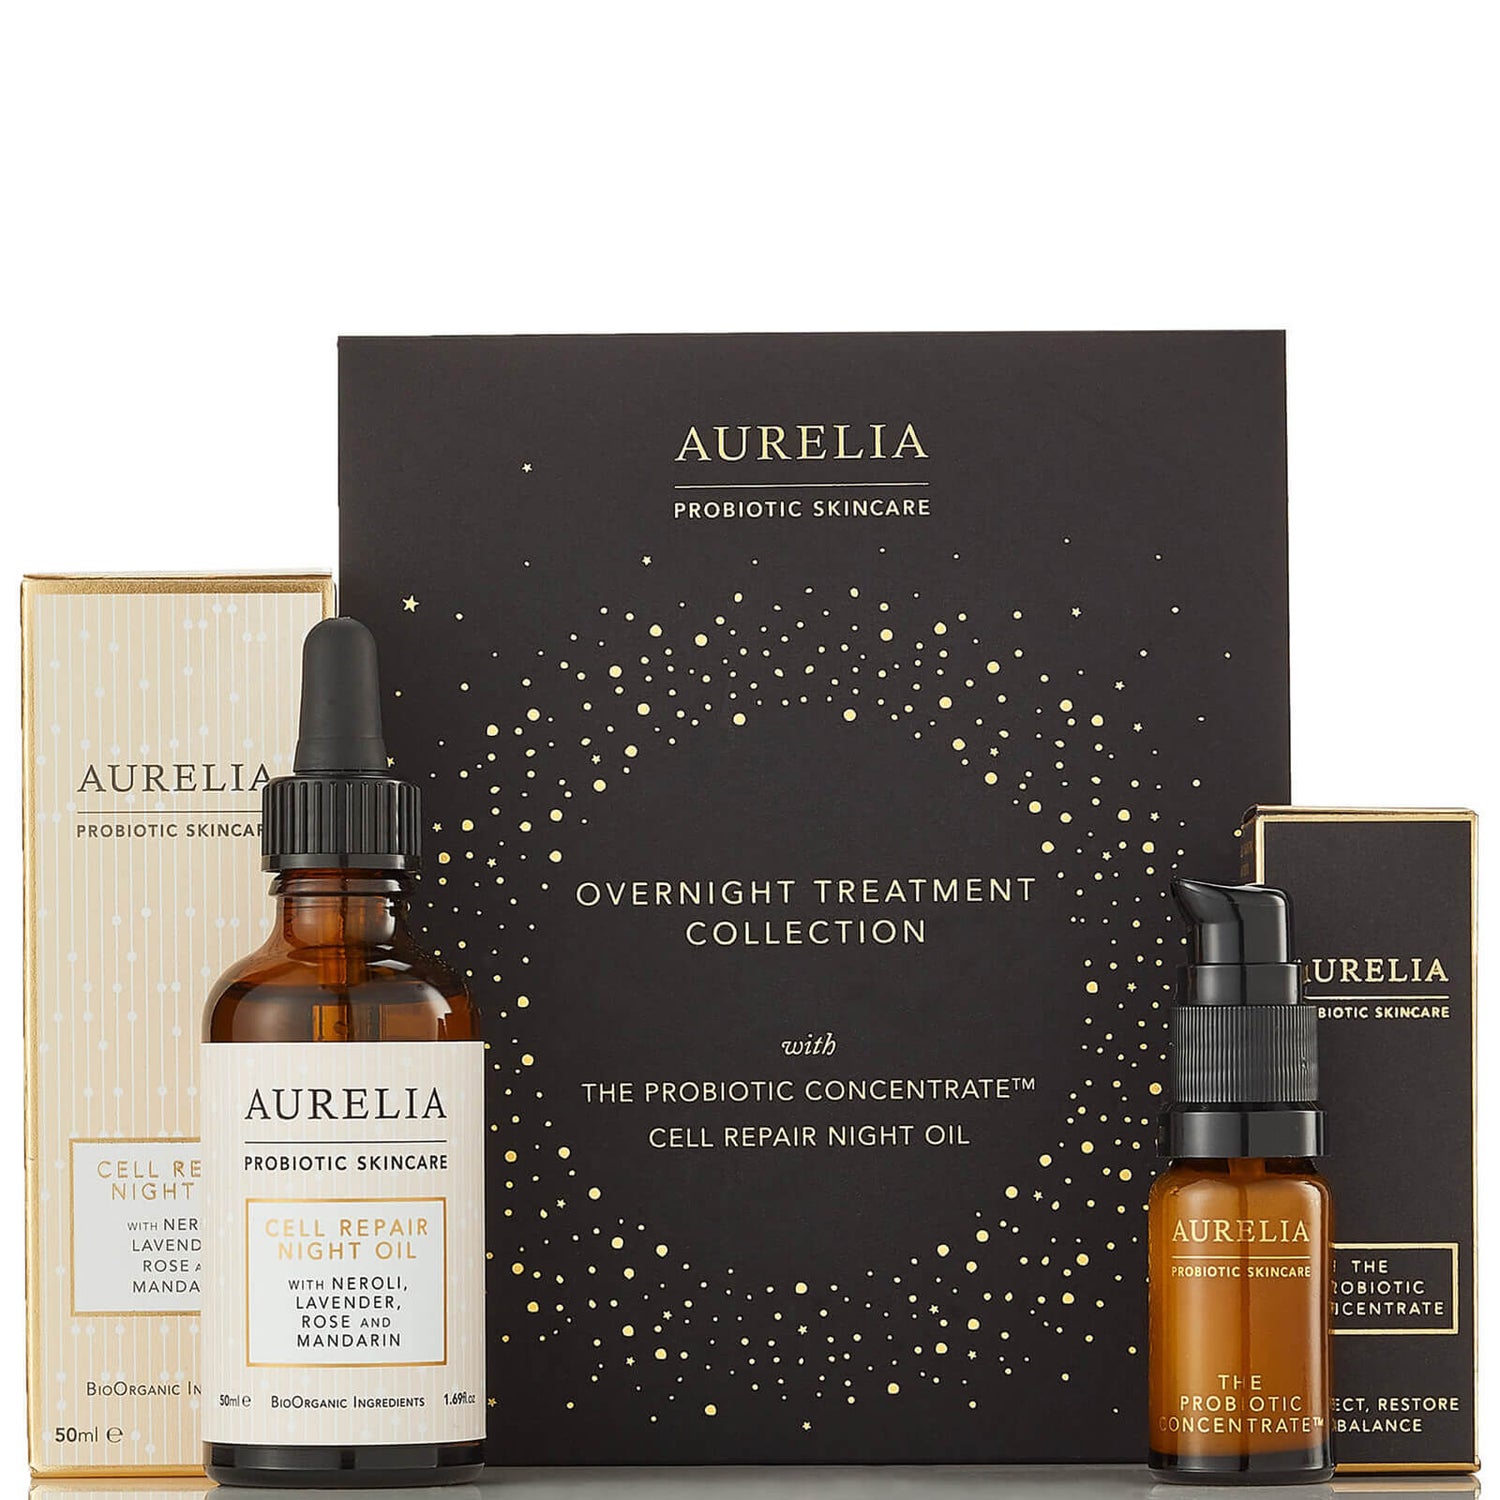 Aurelia Probiotic Skincare Overnight Treatment Collection 益生菌睡眠養膚套裝 60ml